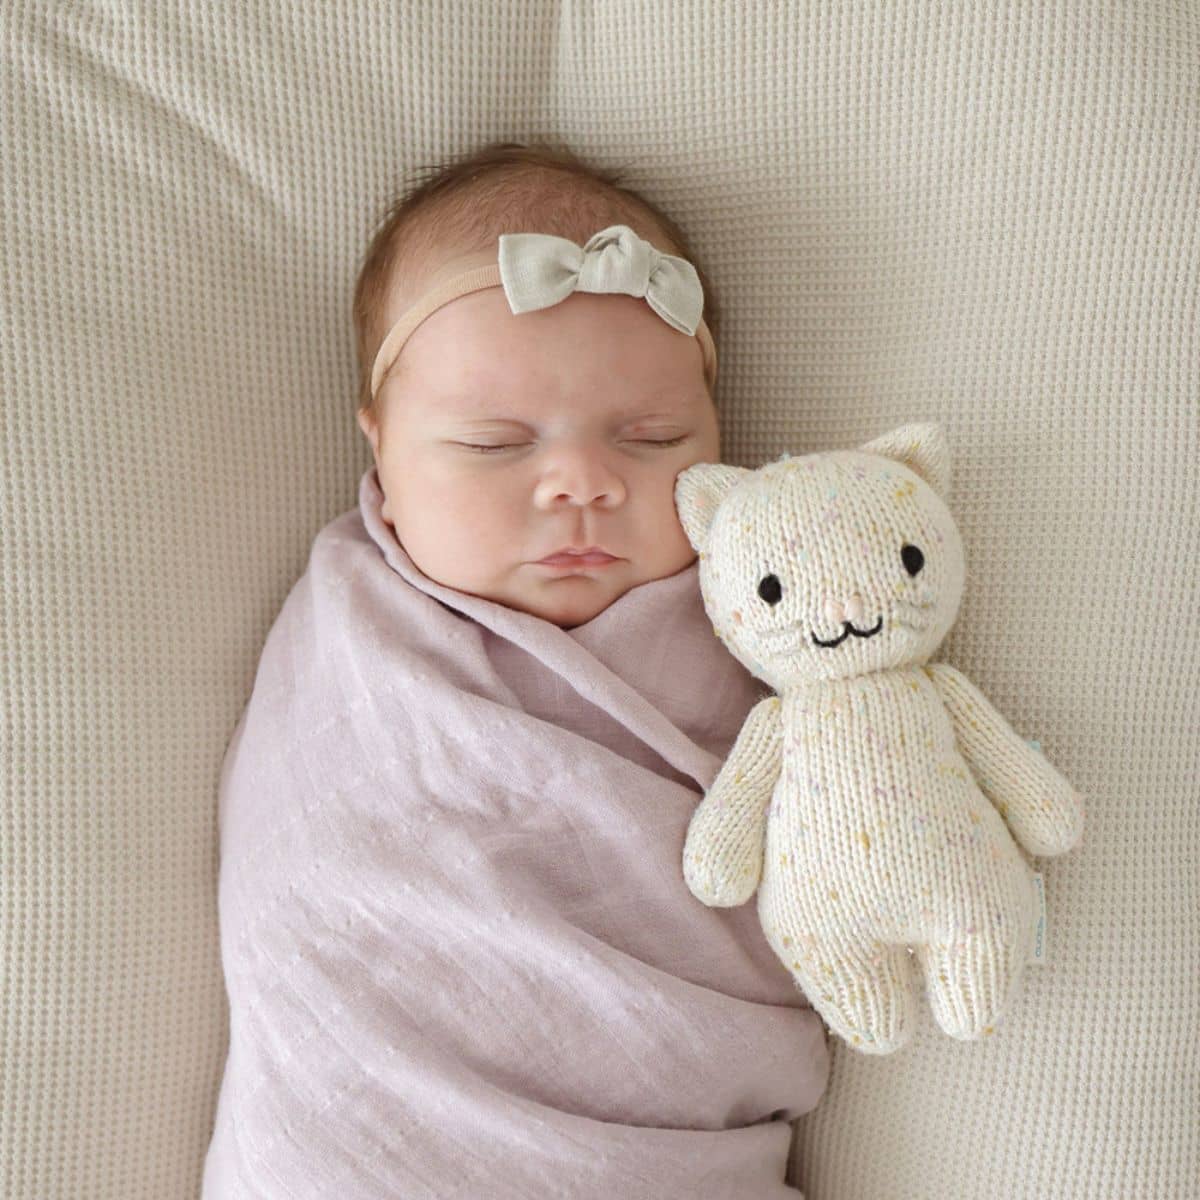 Cuddle + Kind Hand-Knit Doll - Baby Kitten